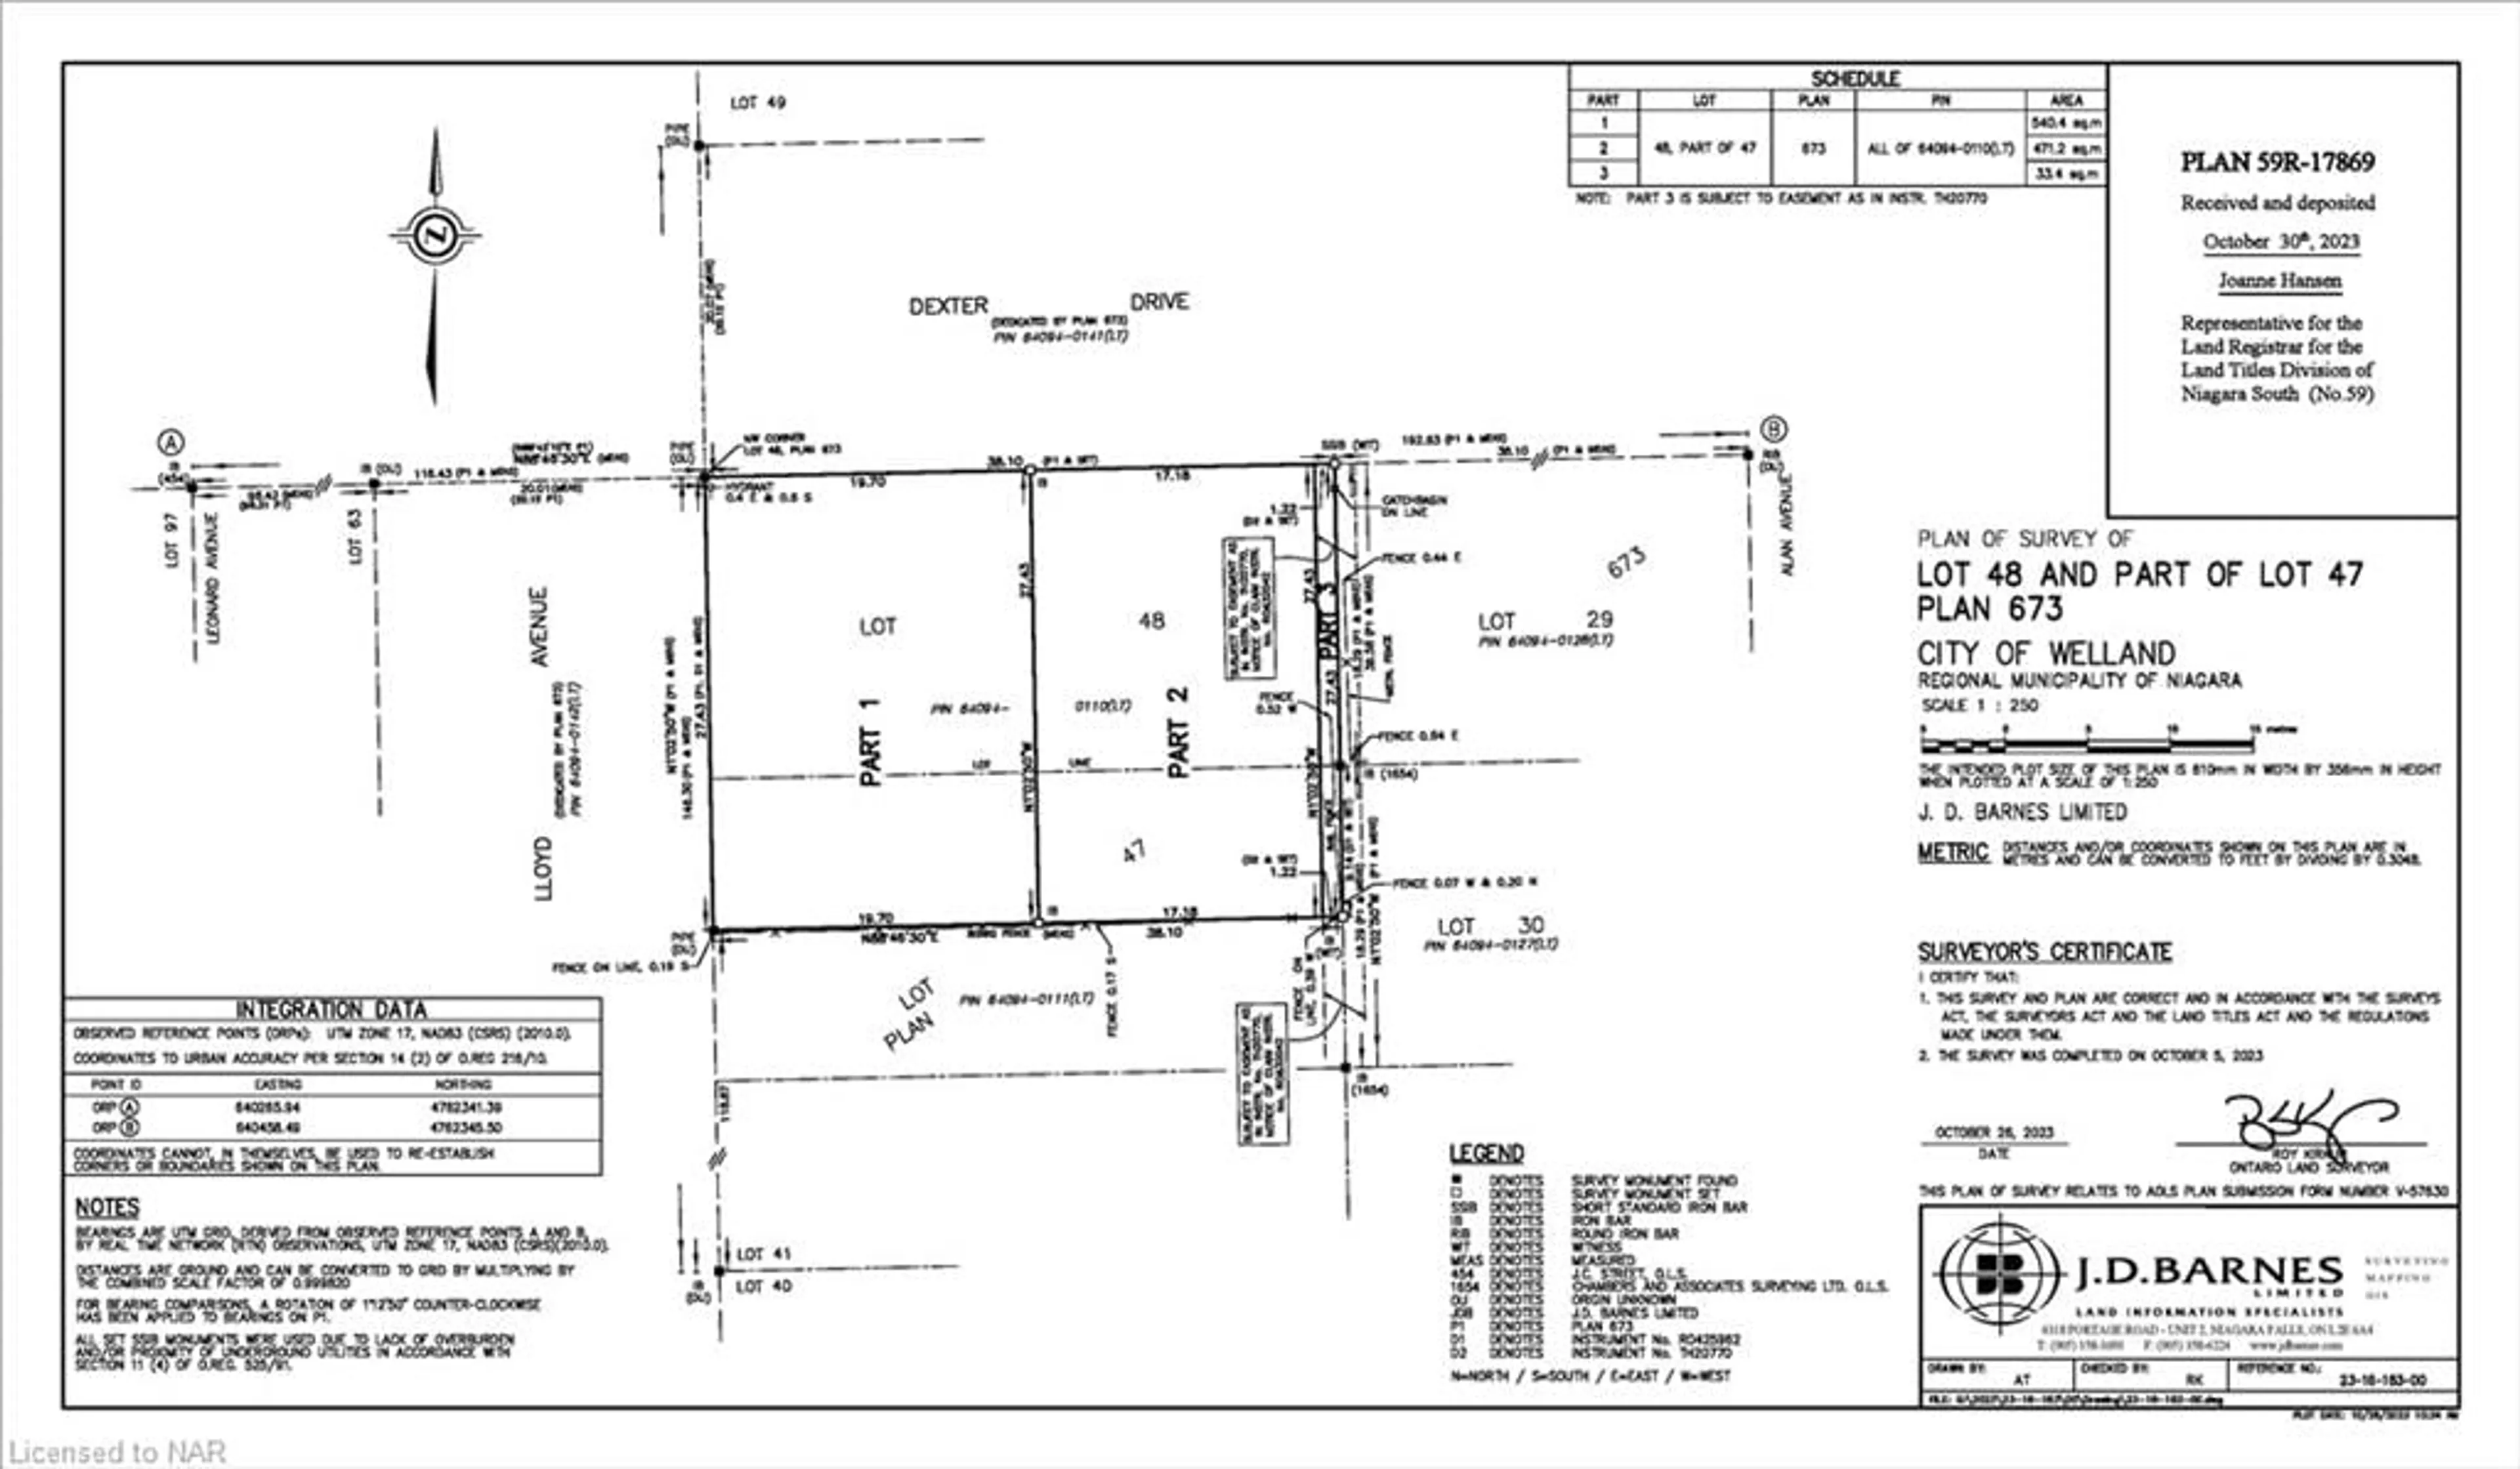 Floor plan for 23 & 29 Dexter Dr, Welland Ontario L3C 2Y8